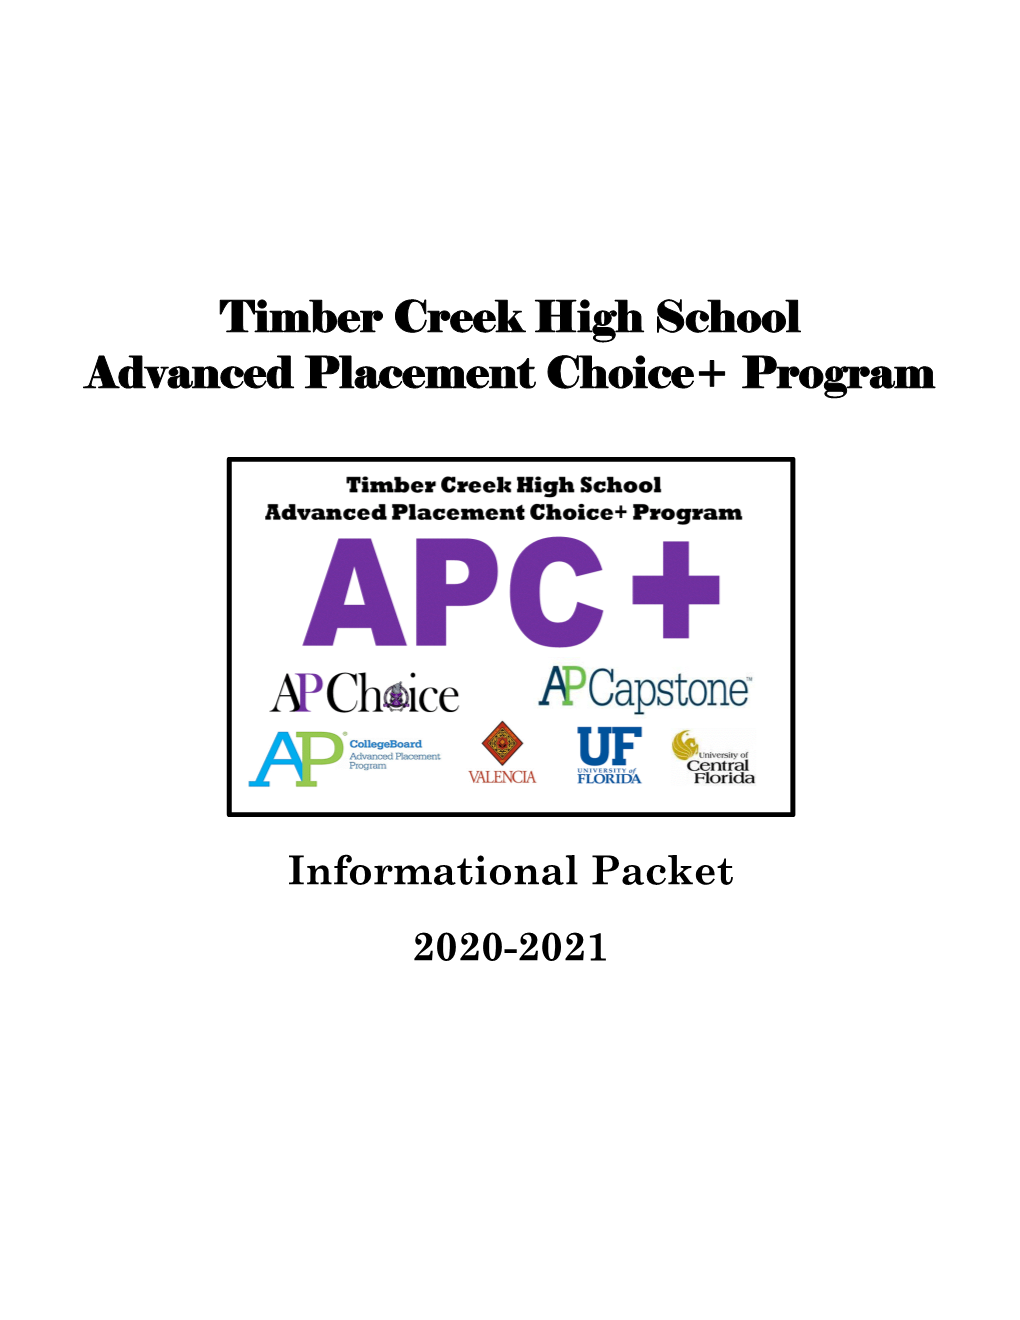 Timber Creek High School Advanced Placement Choice+ Program